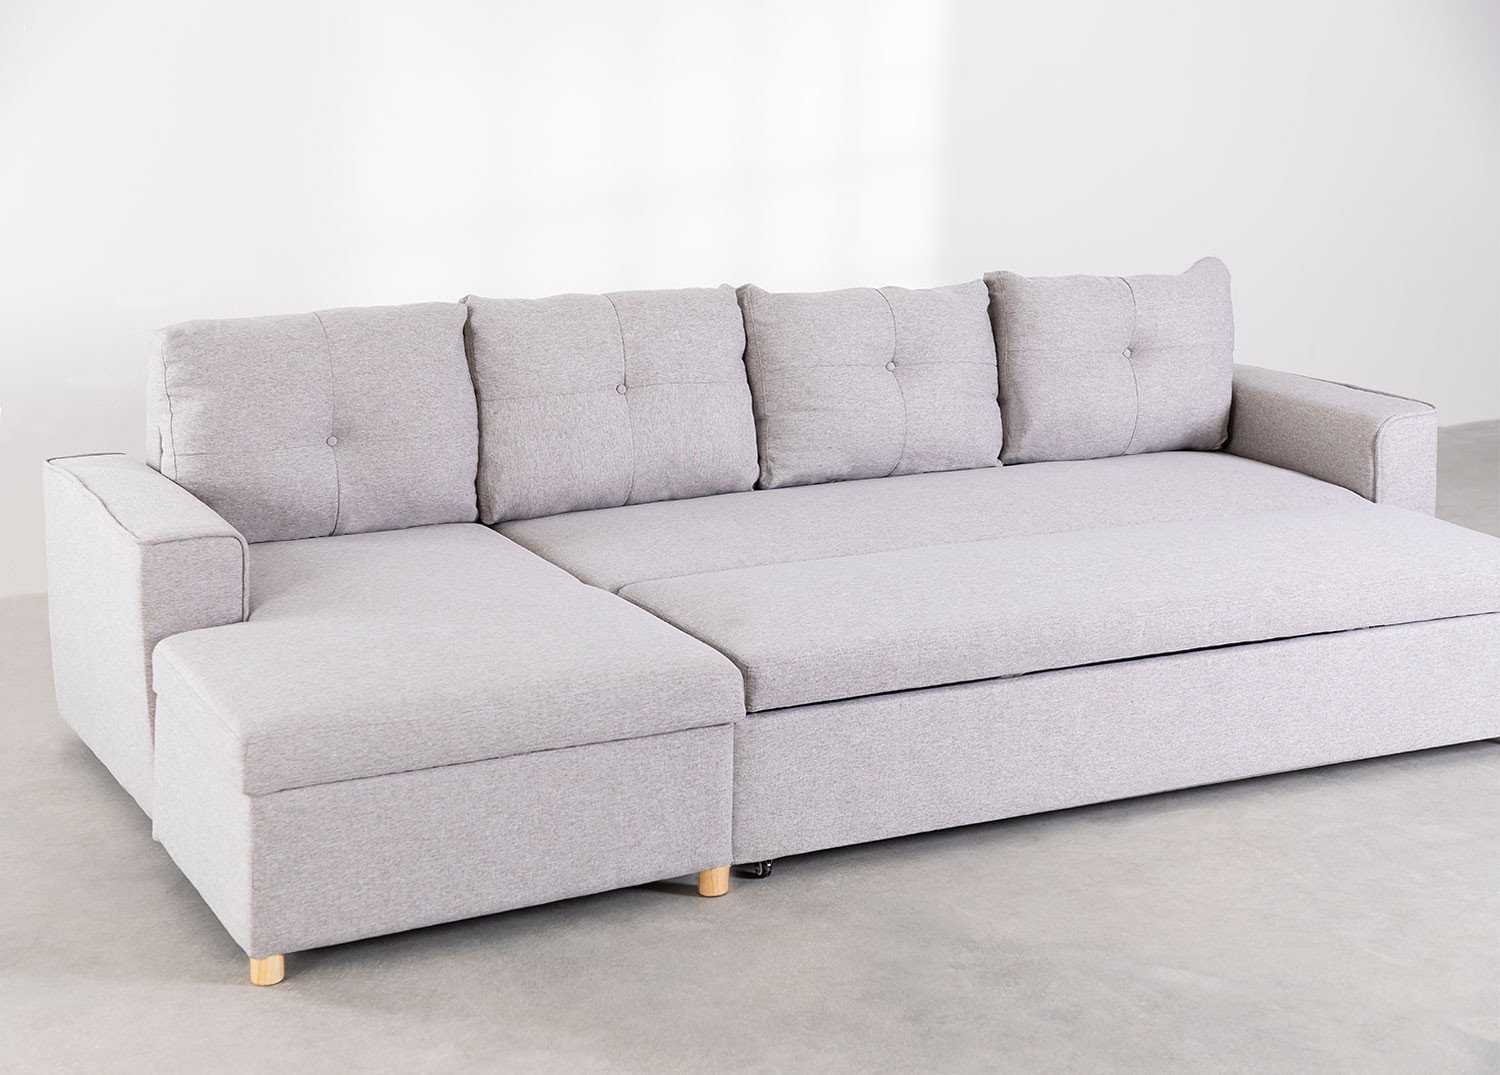 amazon chaise longue sofa bed